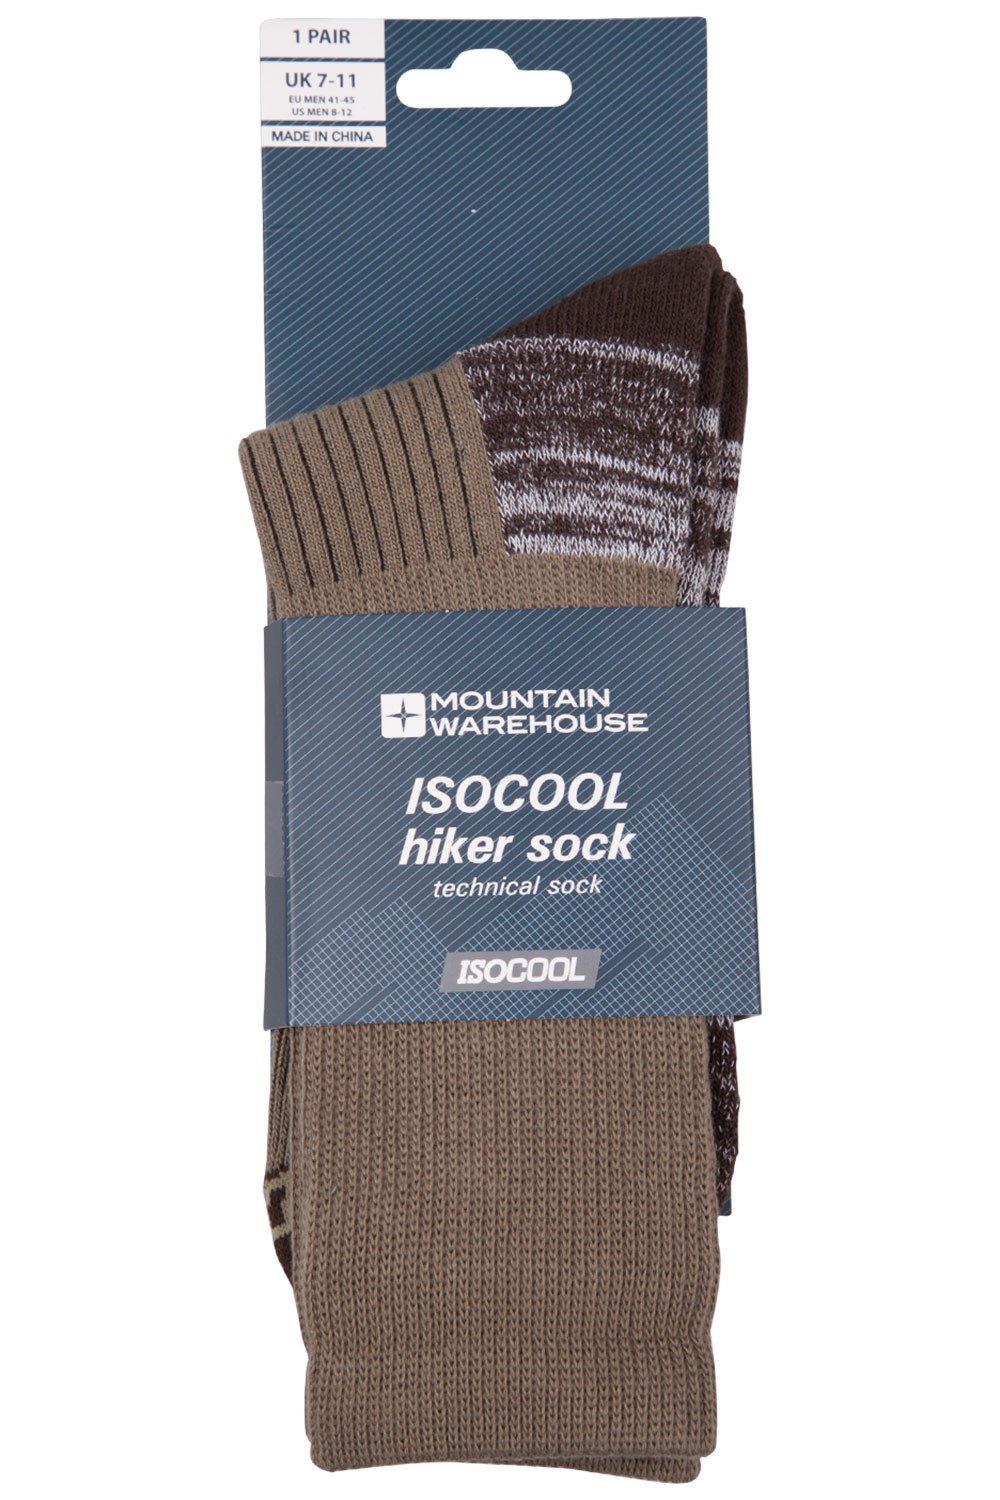 Mountain Warehouse Isocool Hiker Socks Beige